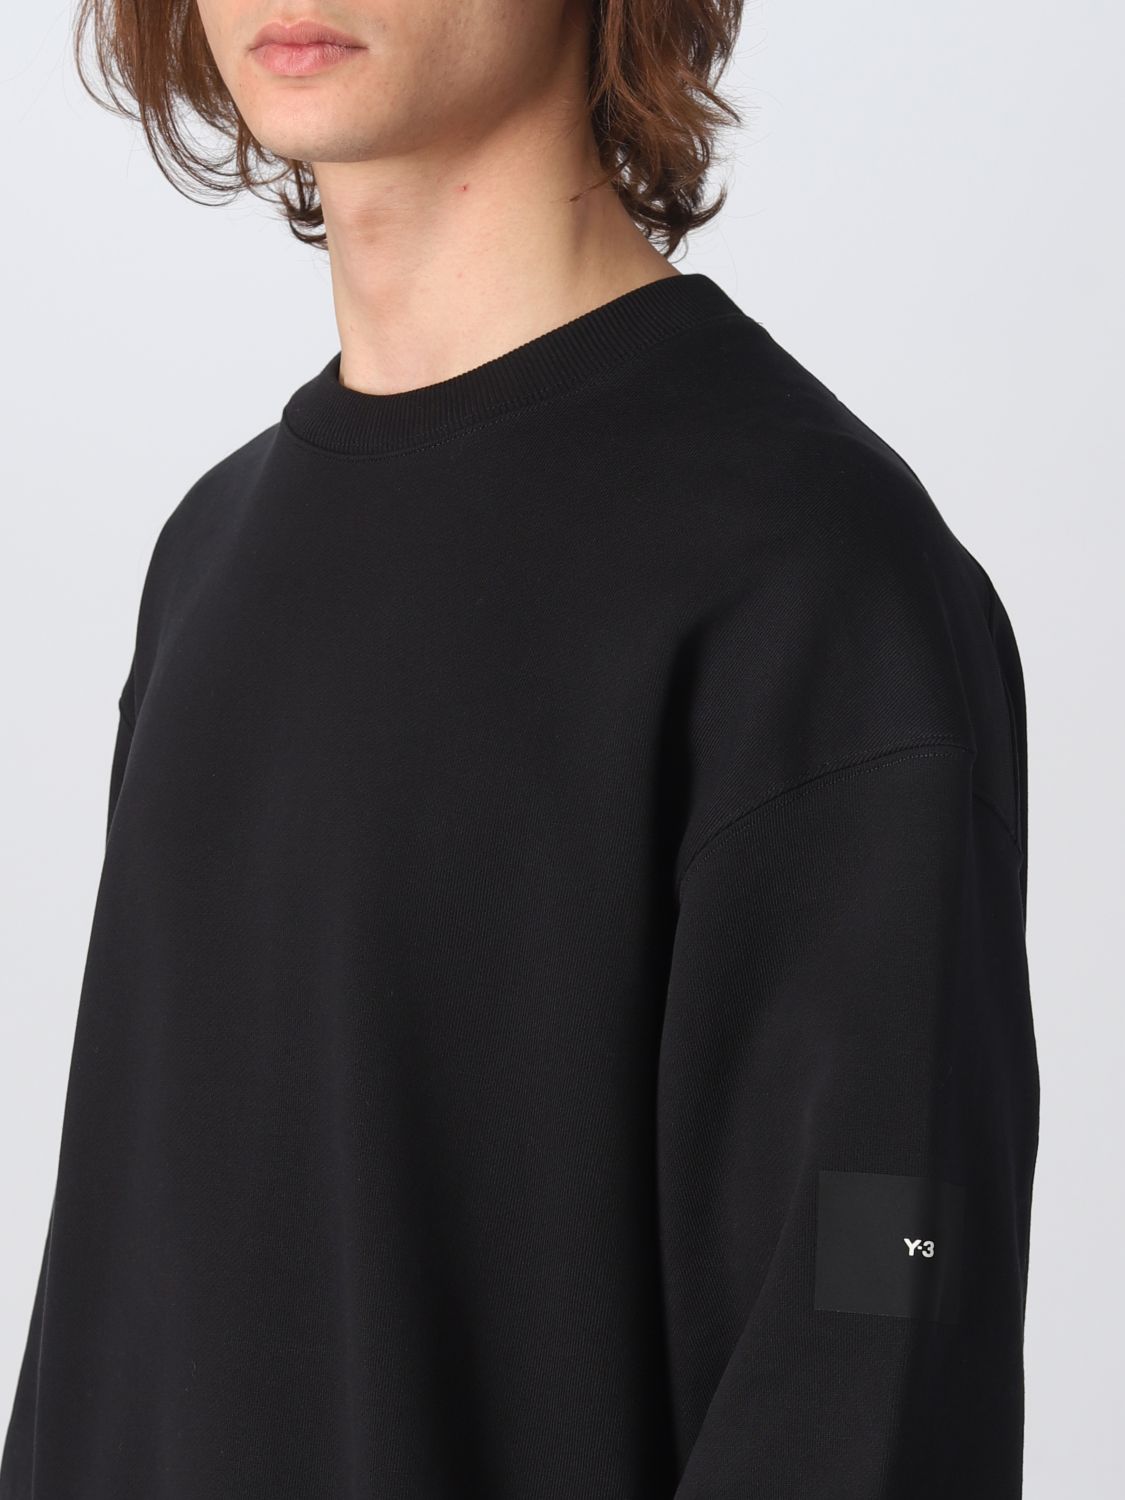 Y-3: sweatshirt for man - Black | Y-3 sweatshirt H44783 online on ...